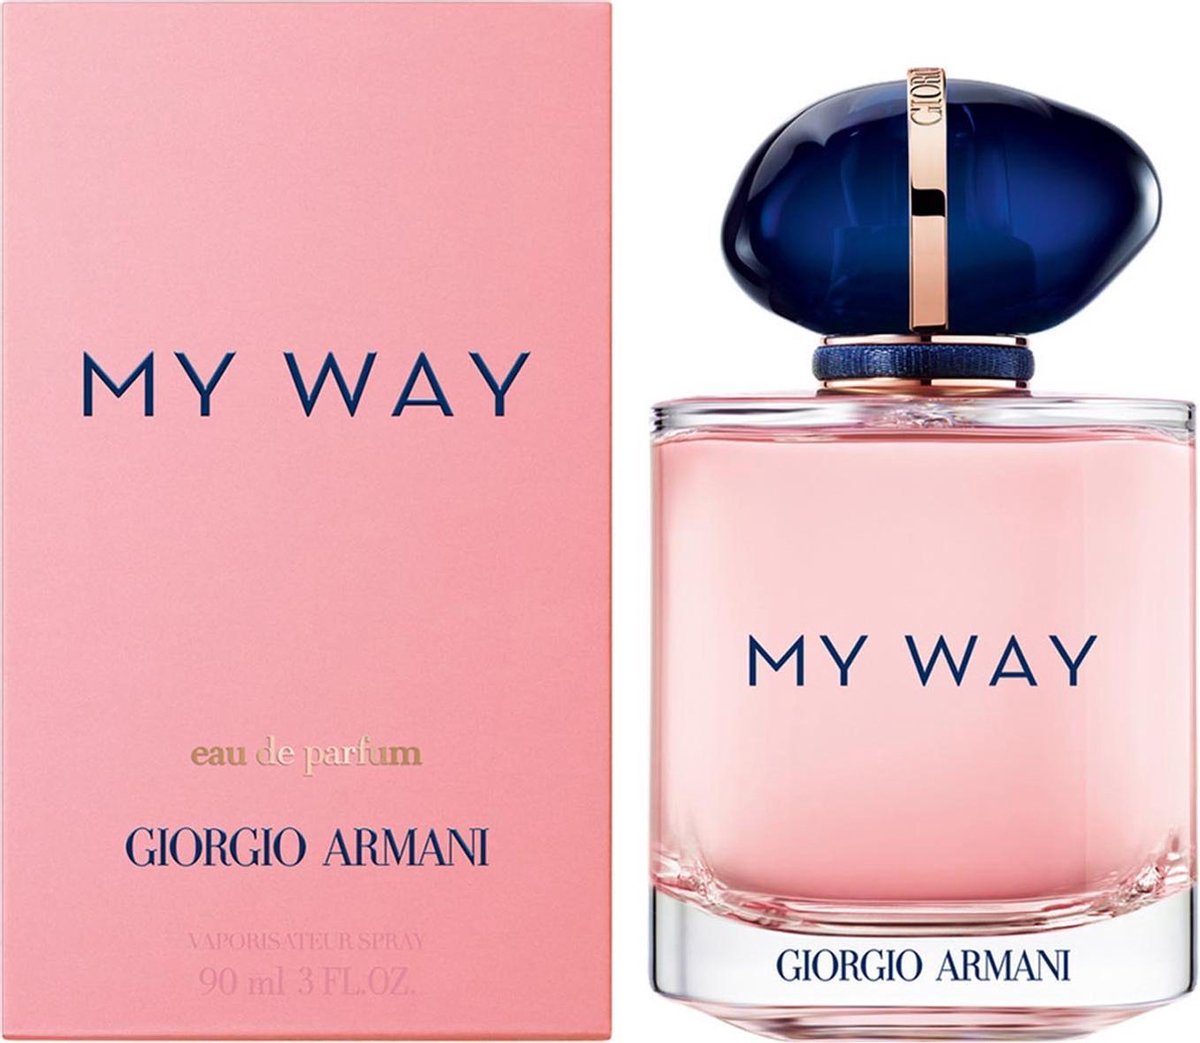 armani my way eau de parfum 90 ml